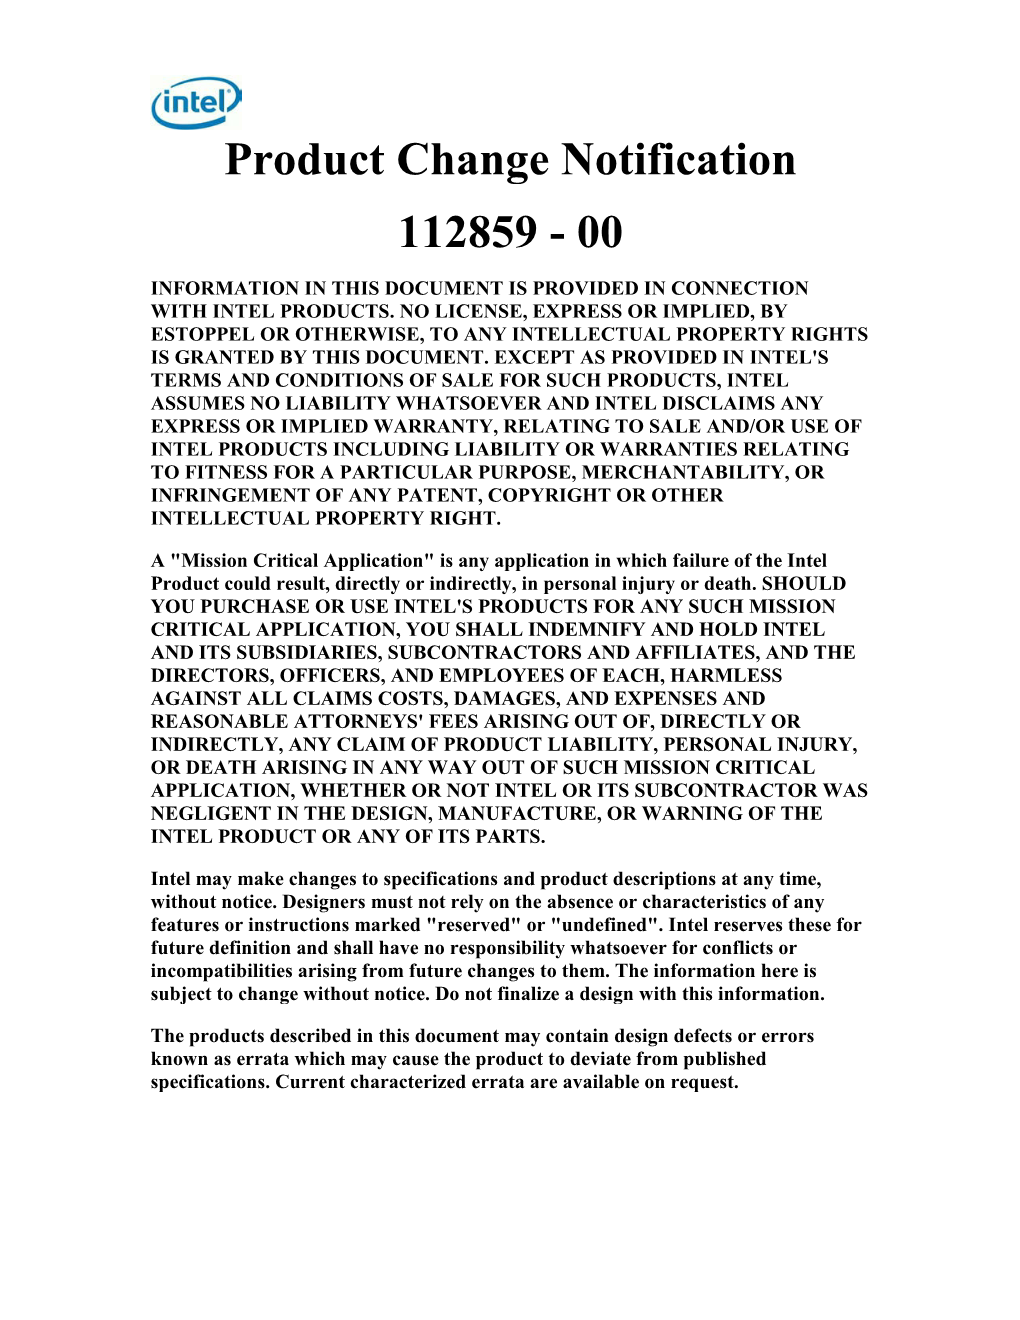 Product Change Notification 112859